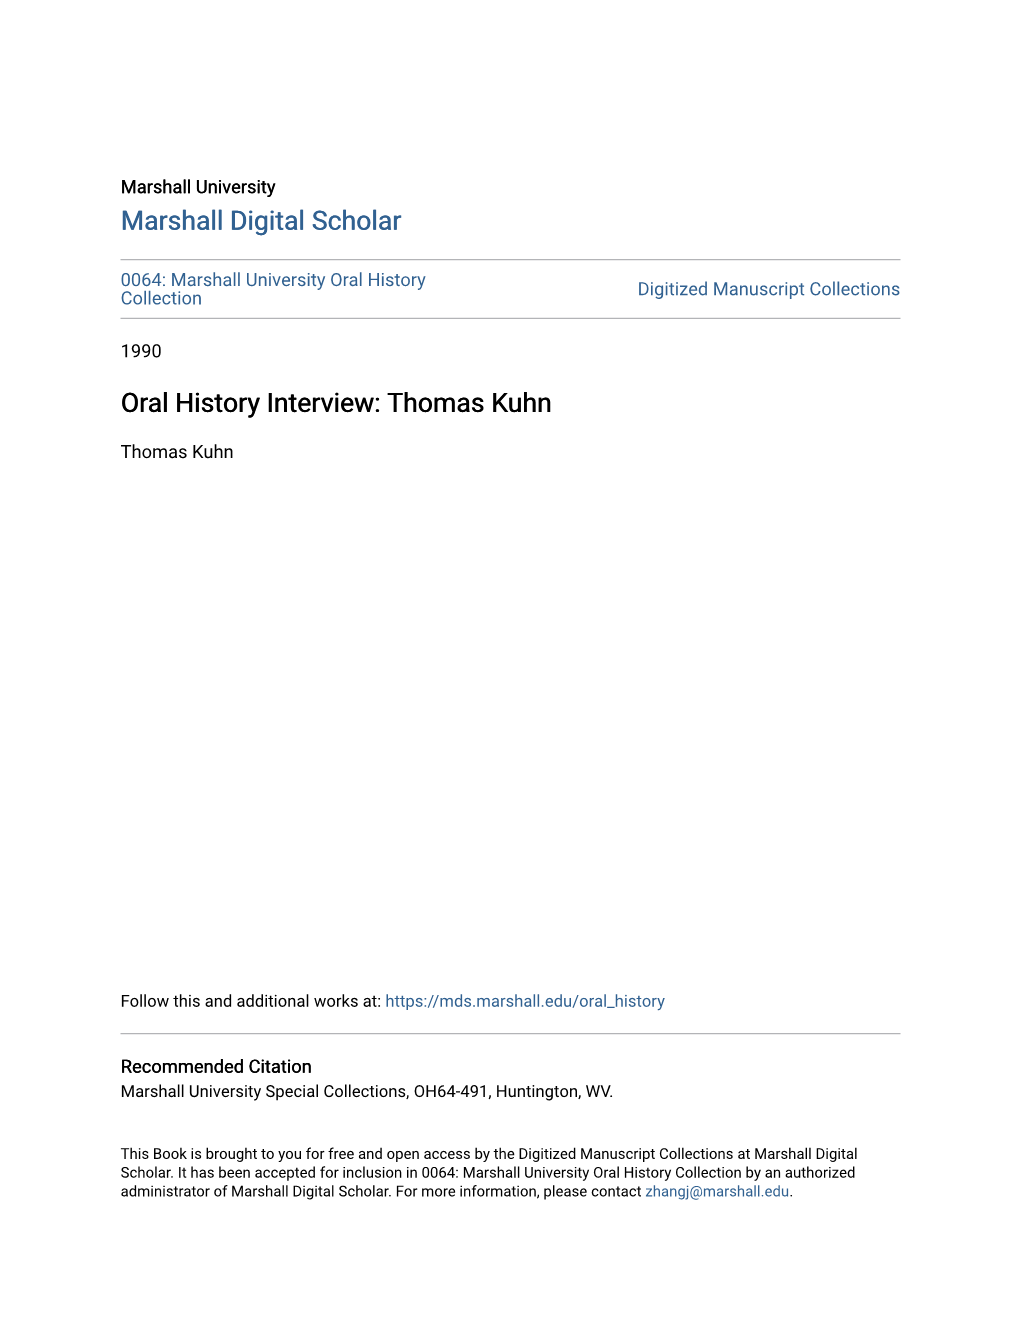 Oral History Interview: Thomas Kuhn